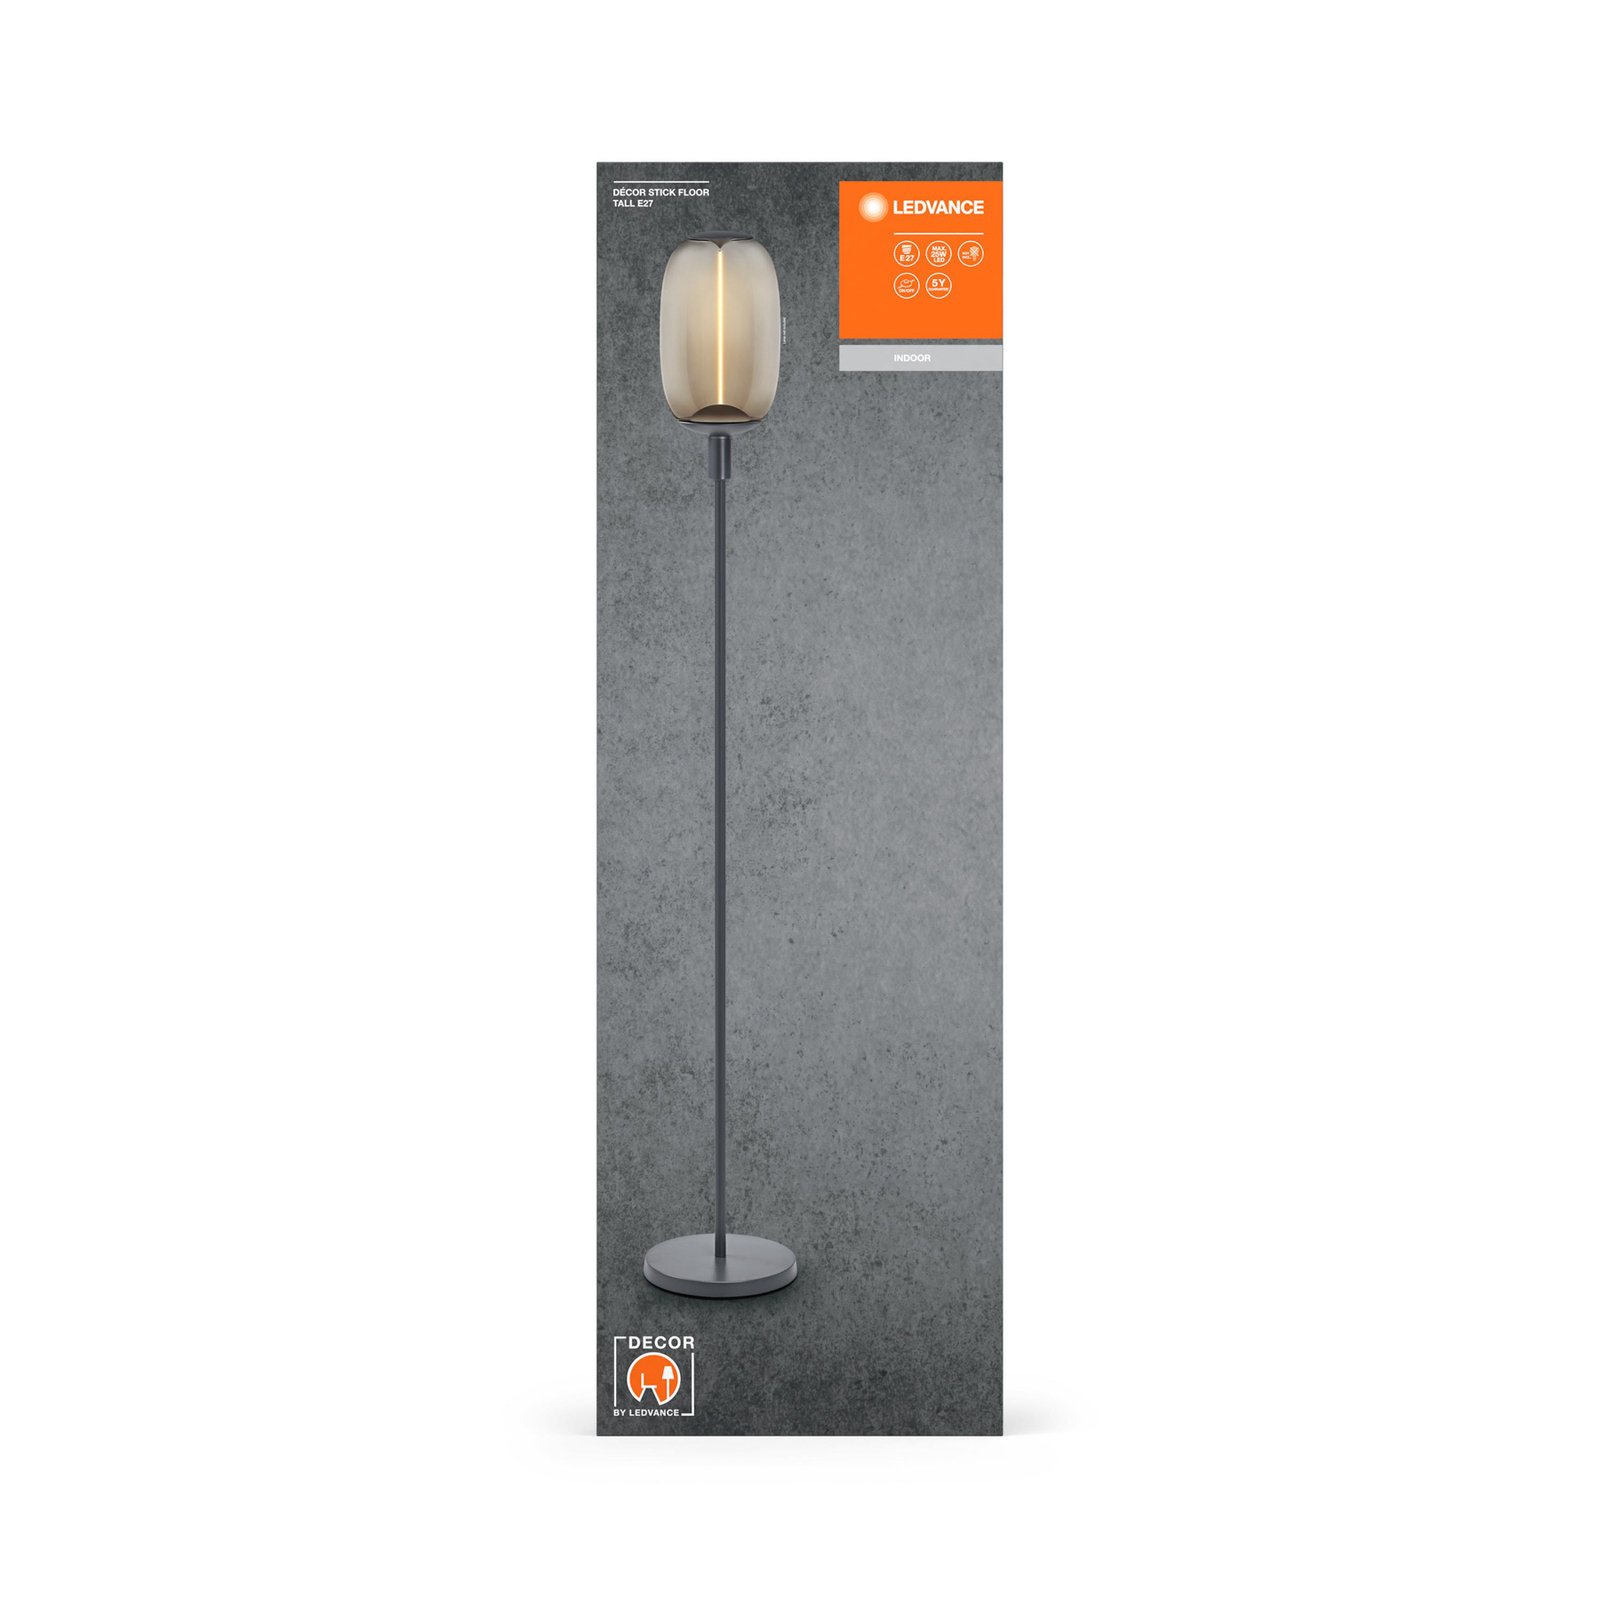 LEDVANCE vloerlamp Decor Stick E27, hoogte 146cm, donkergrijs